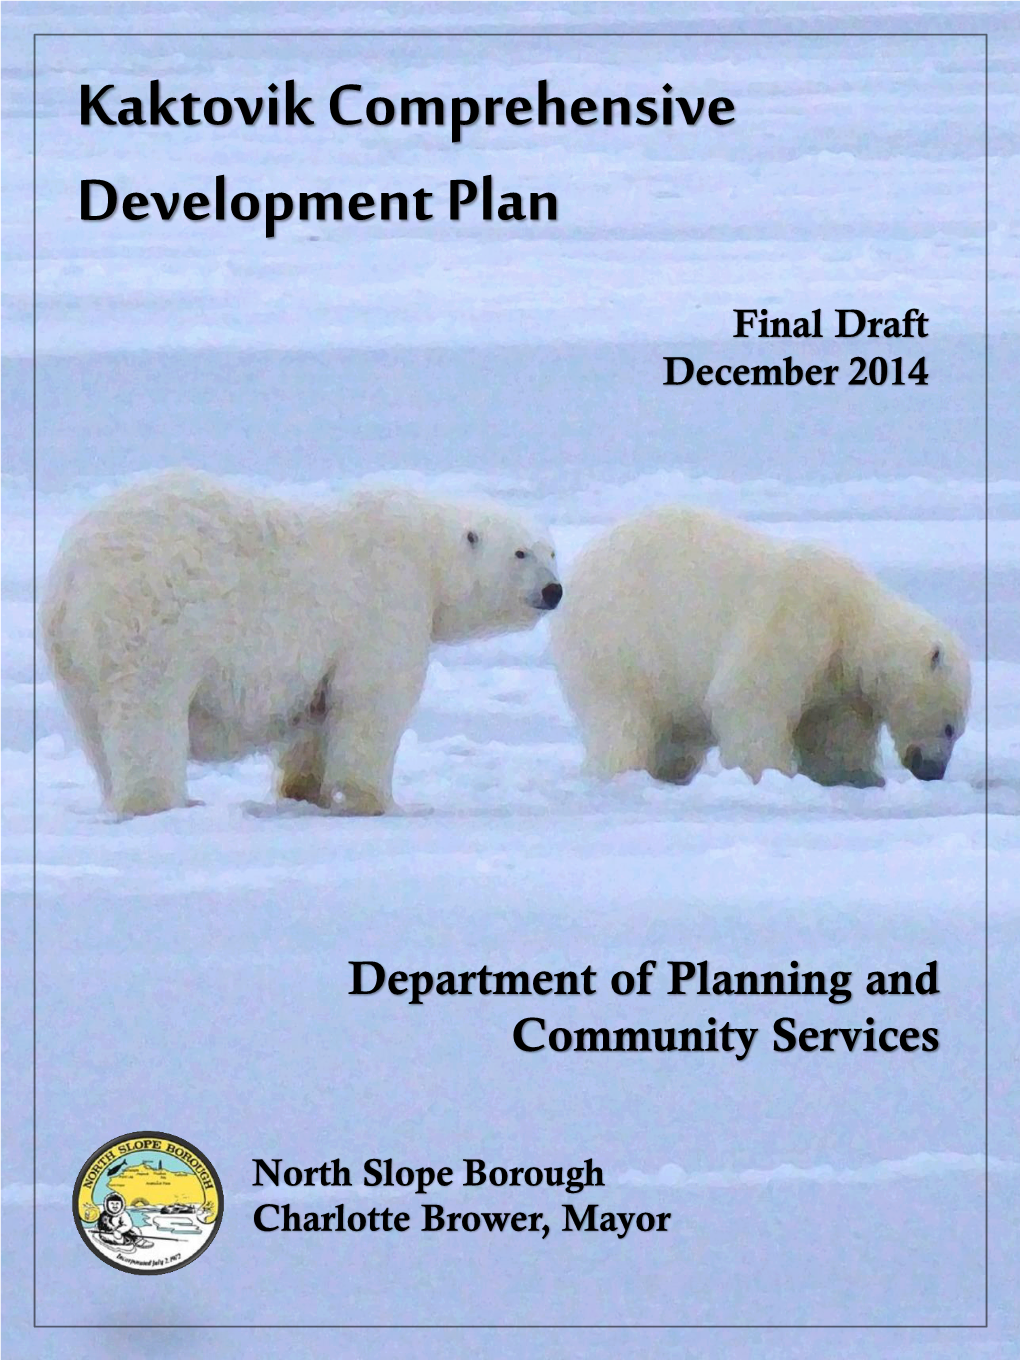 Kaktovik Comprehensive Development Plan